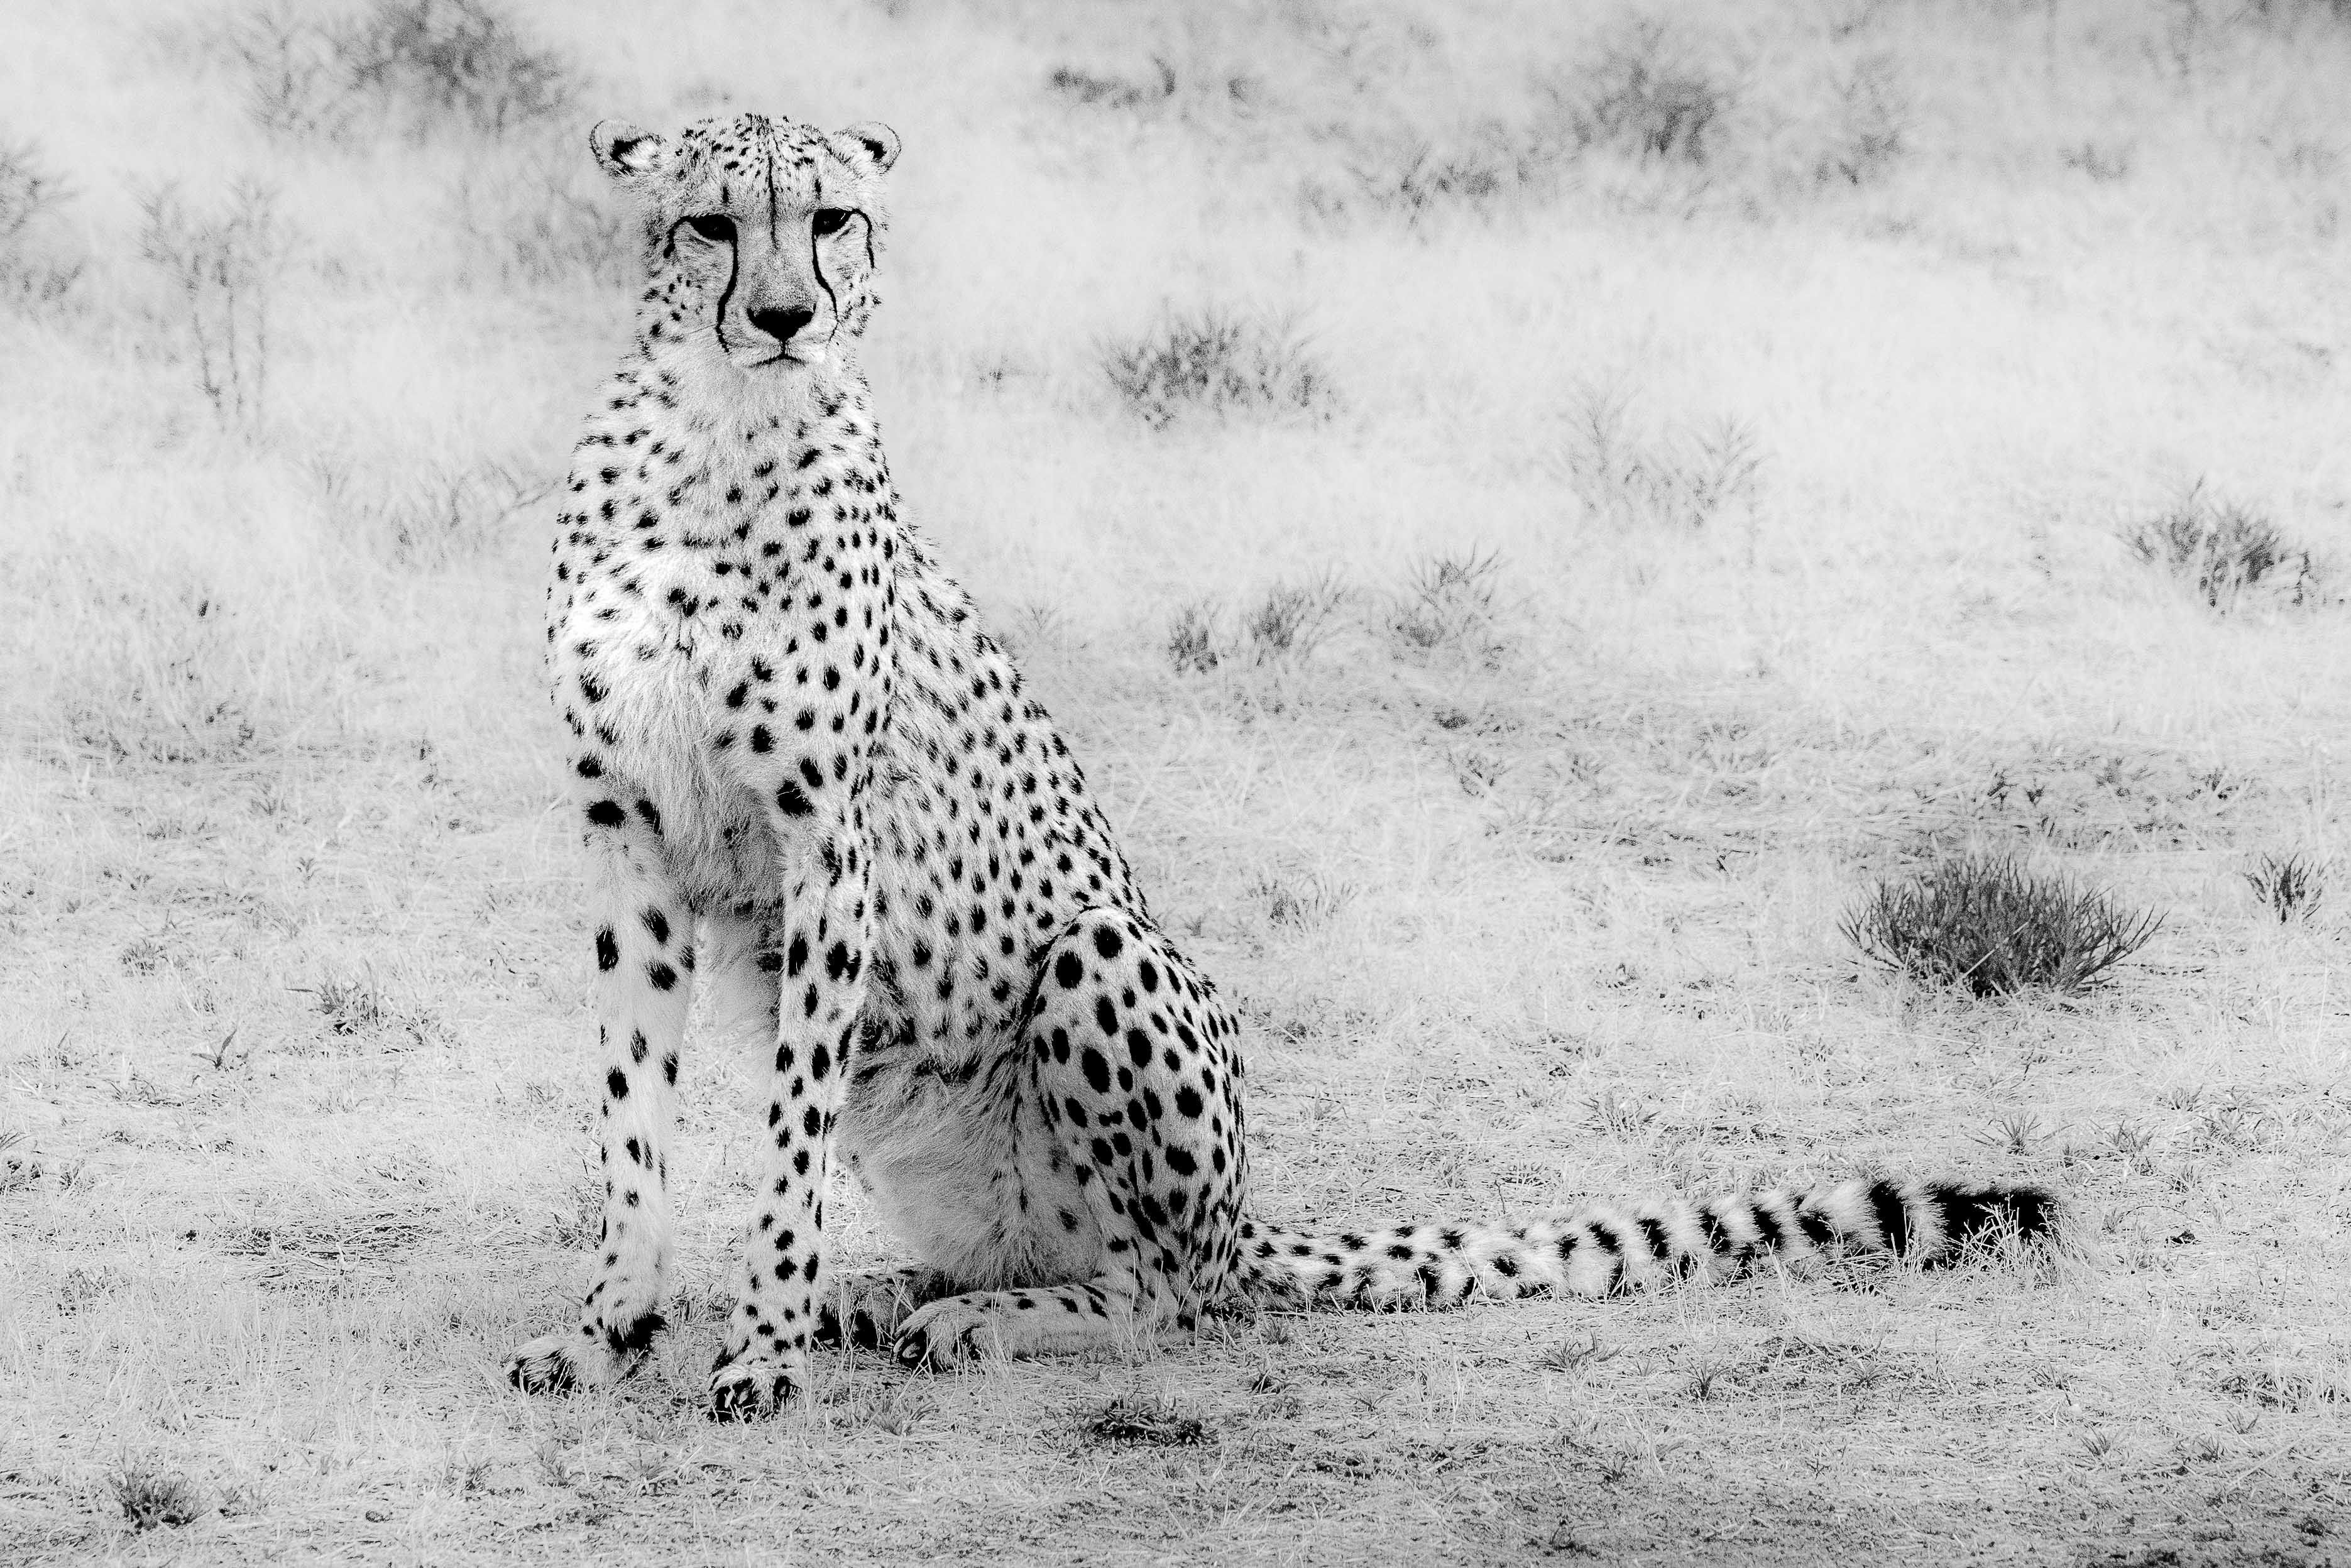 CCFv- Cheetah Conservation Fund